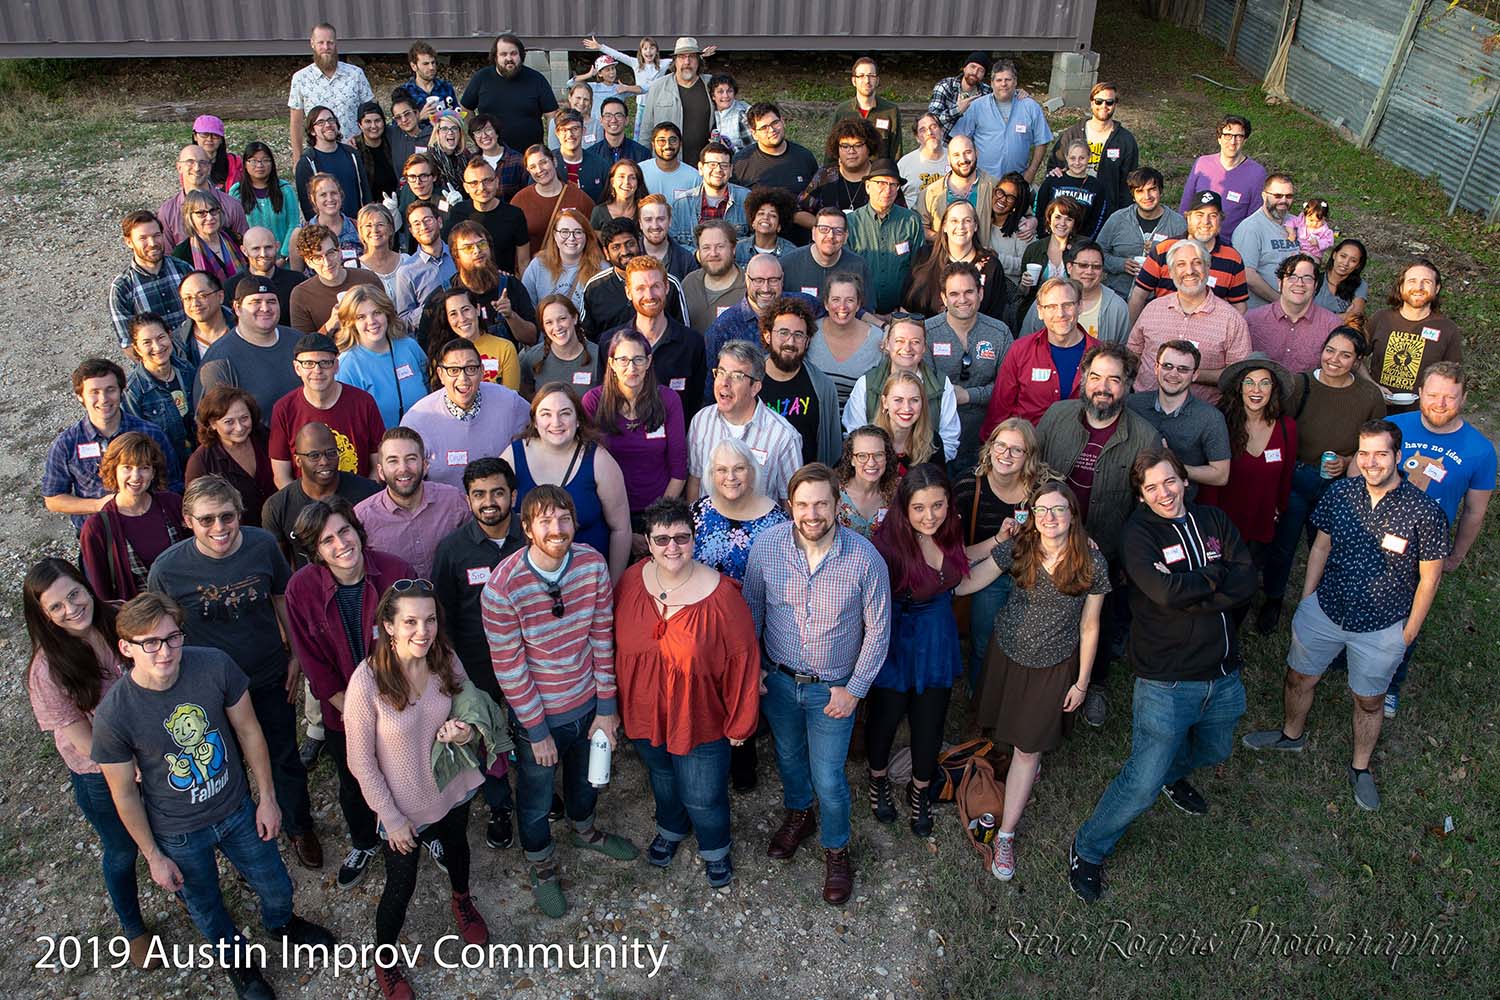 A group photo of the Austin improv community